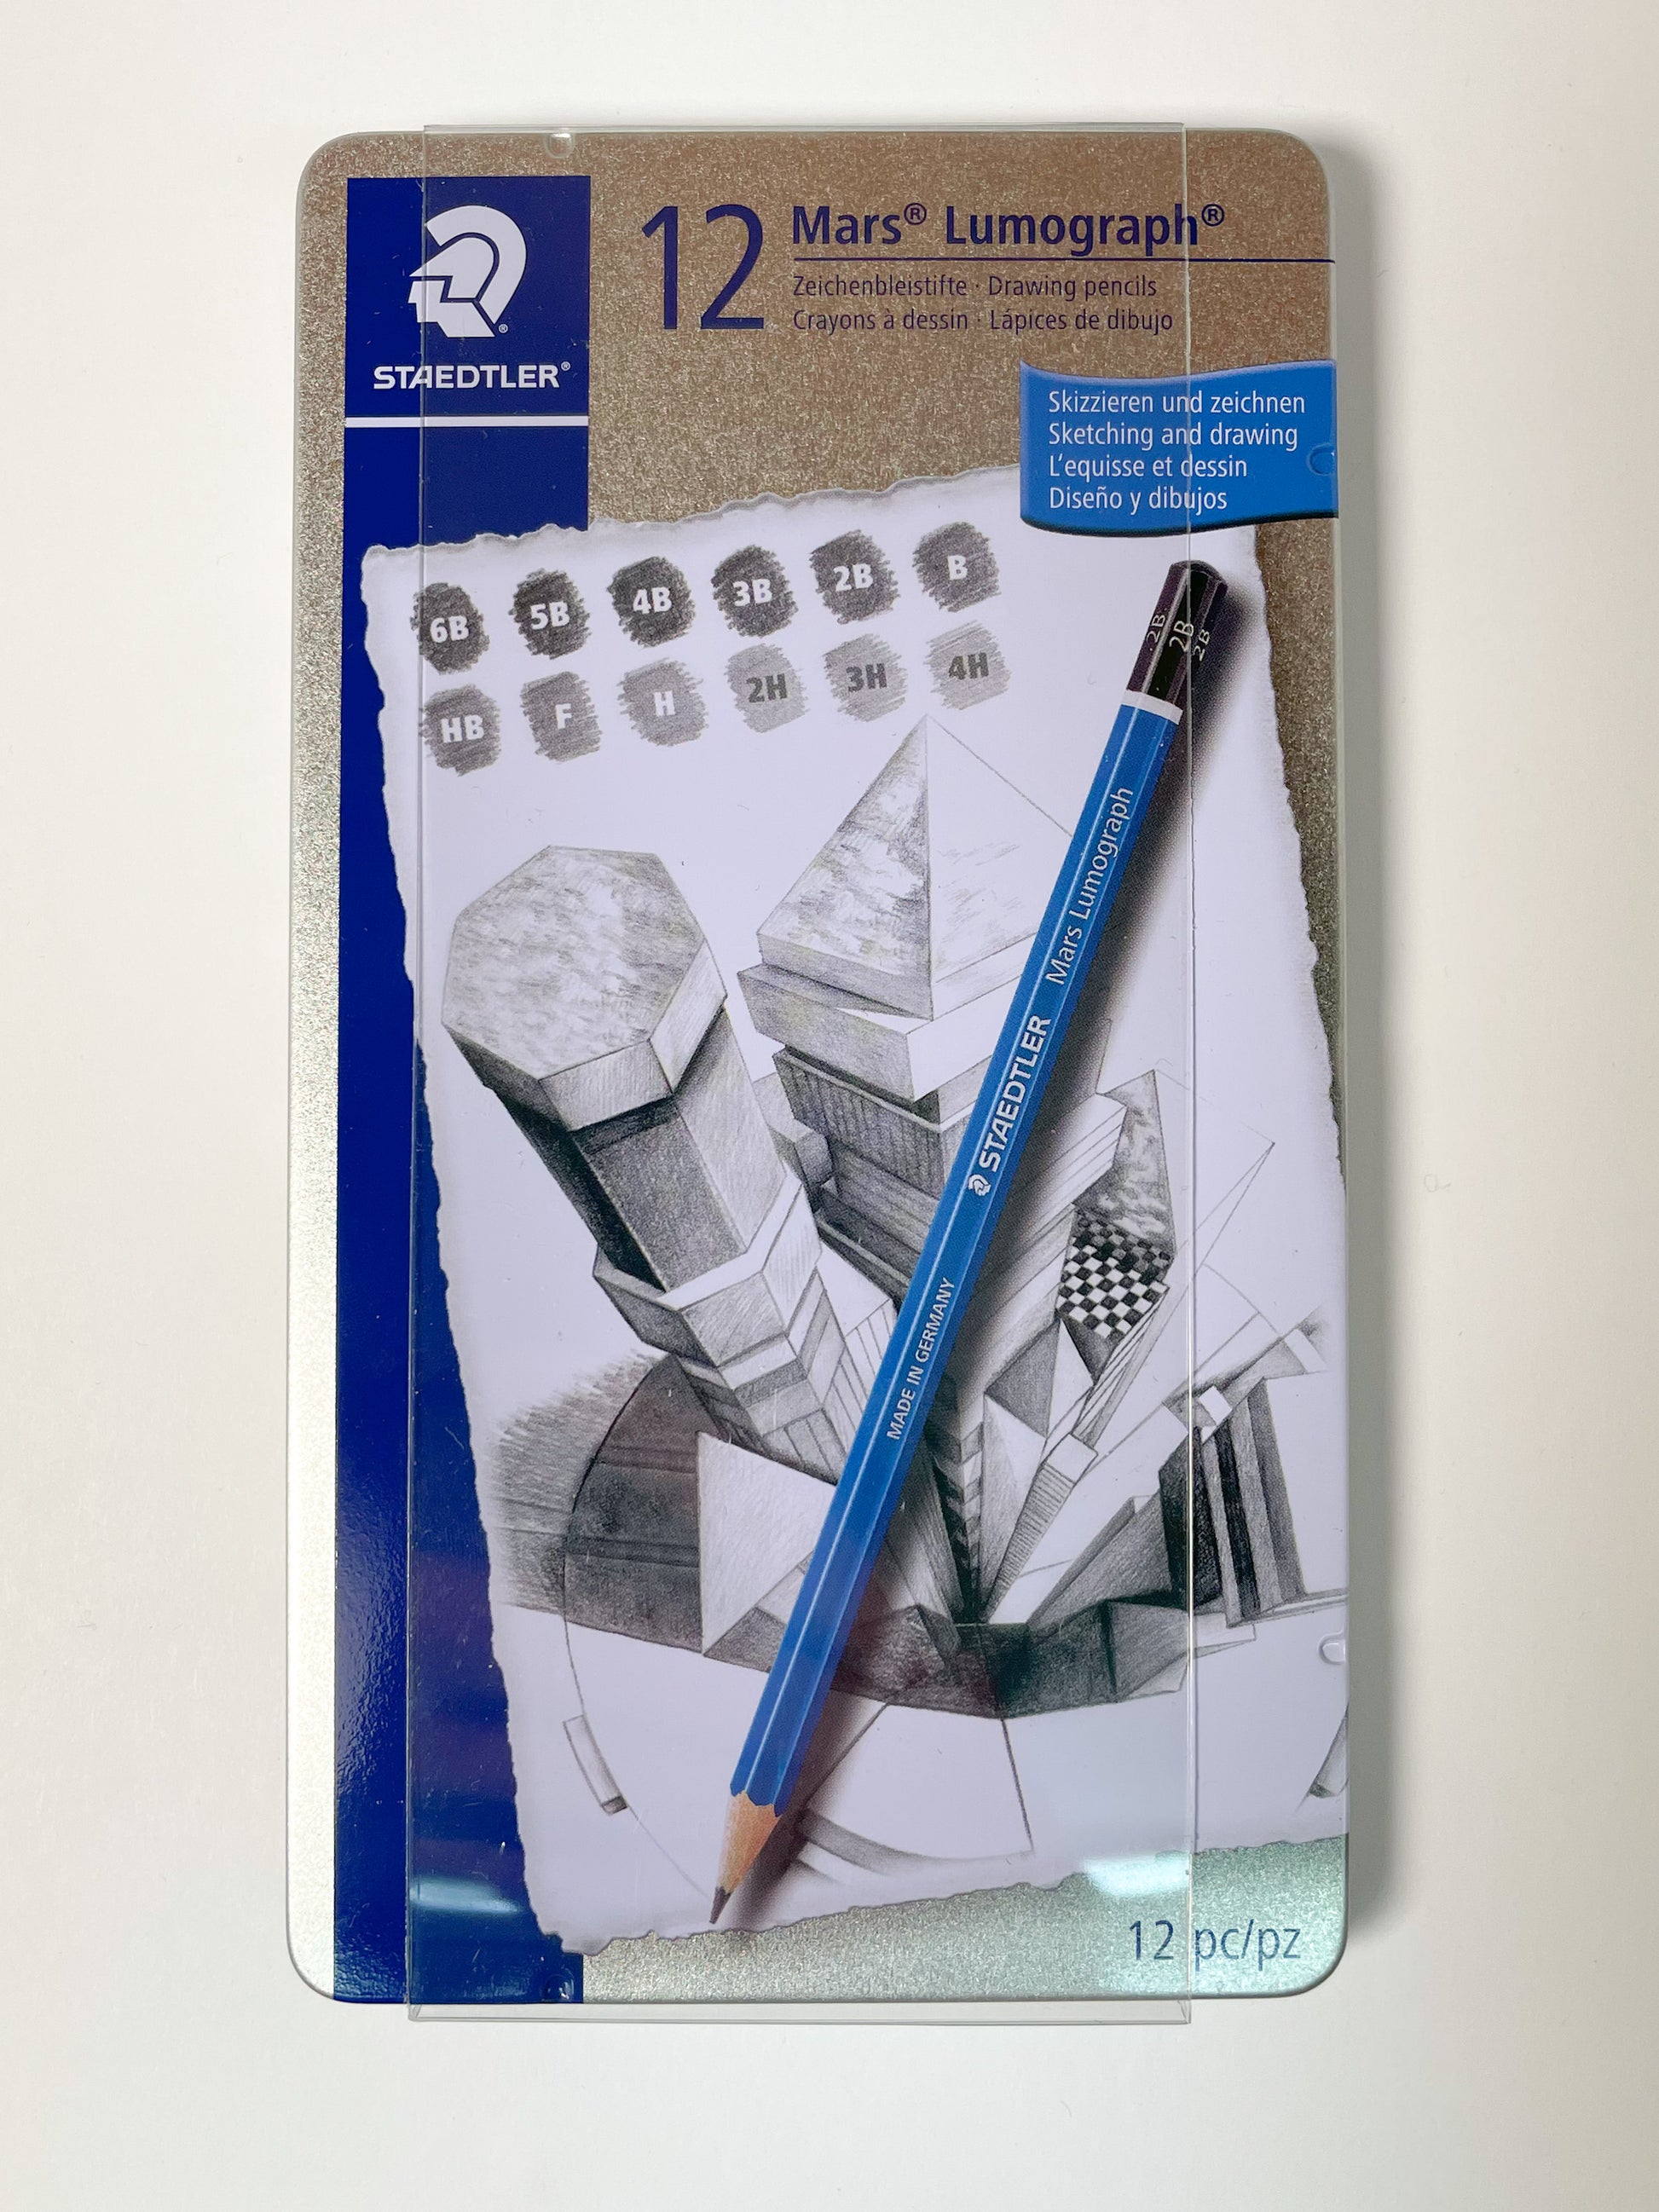  Staedtler Mars Lumograph 6B Graphite Art Drawing Pencil, Soft,  Break-Resistant Bonded Lead, 12 Pack, 100-6B, Grey : Office Products